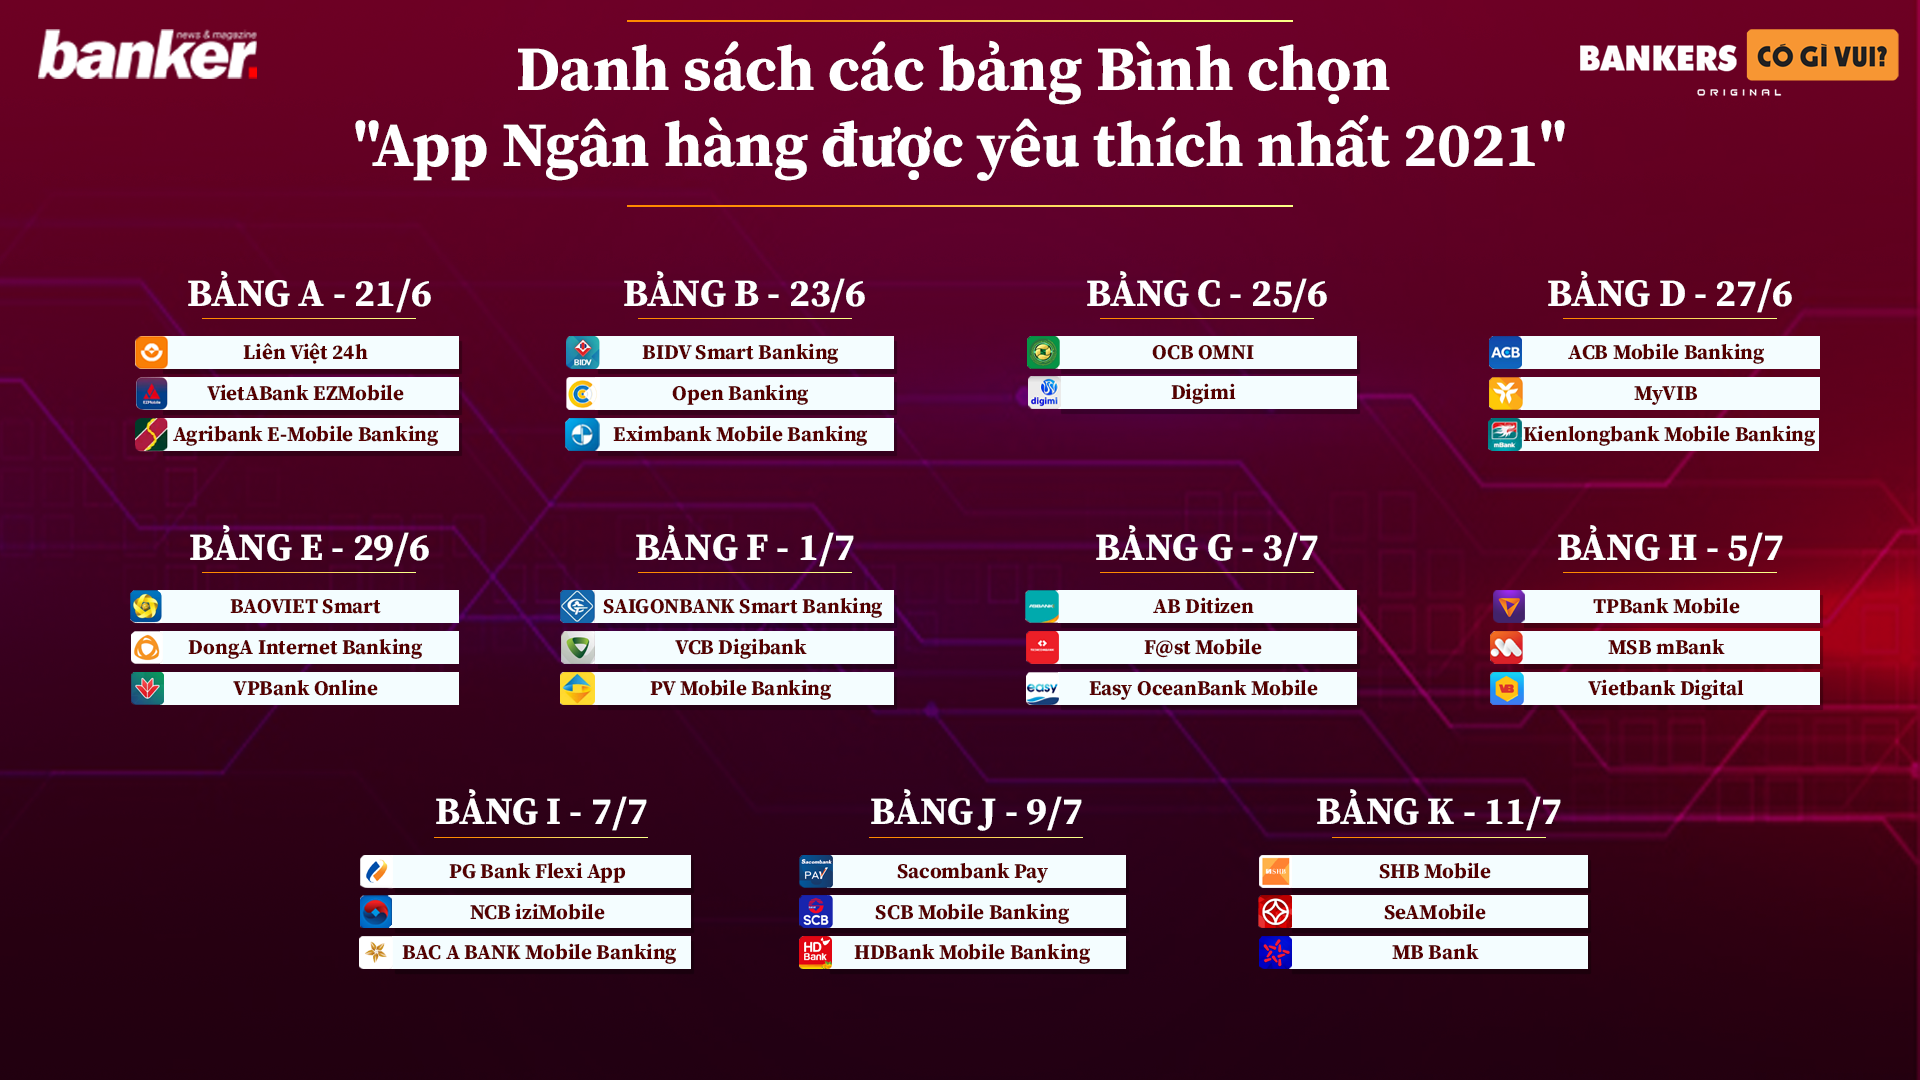 binh-chon-app-duoc-yeu-thich-nhat-2021